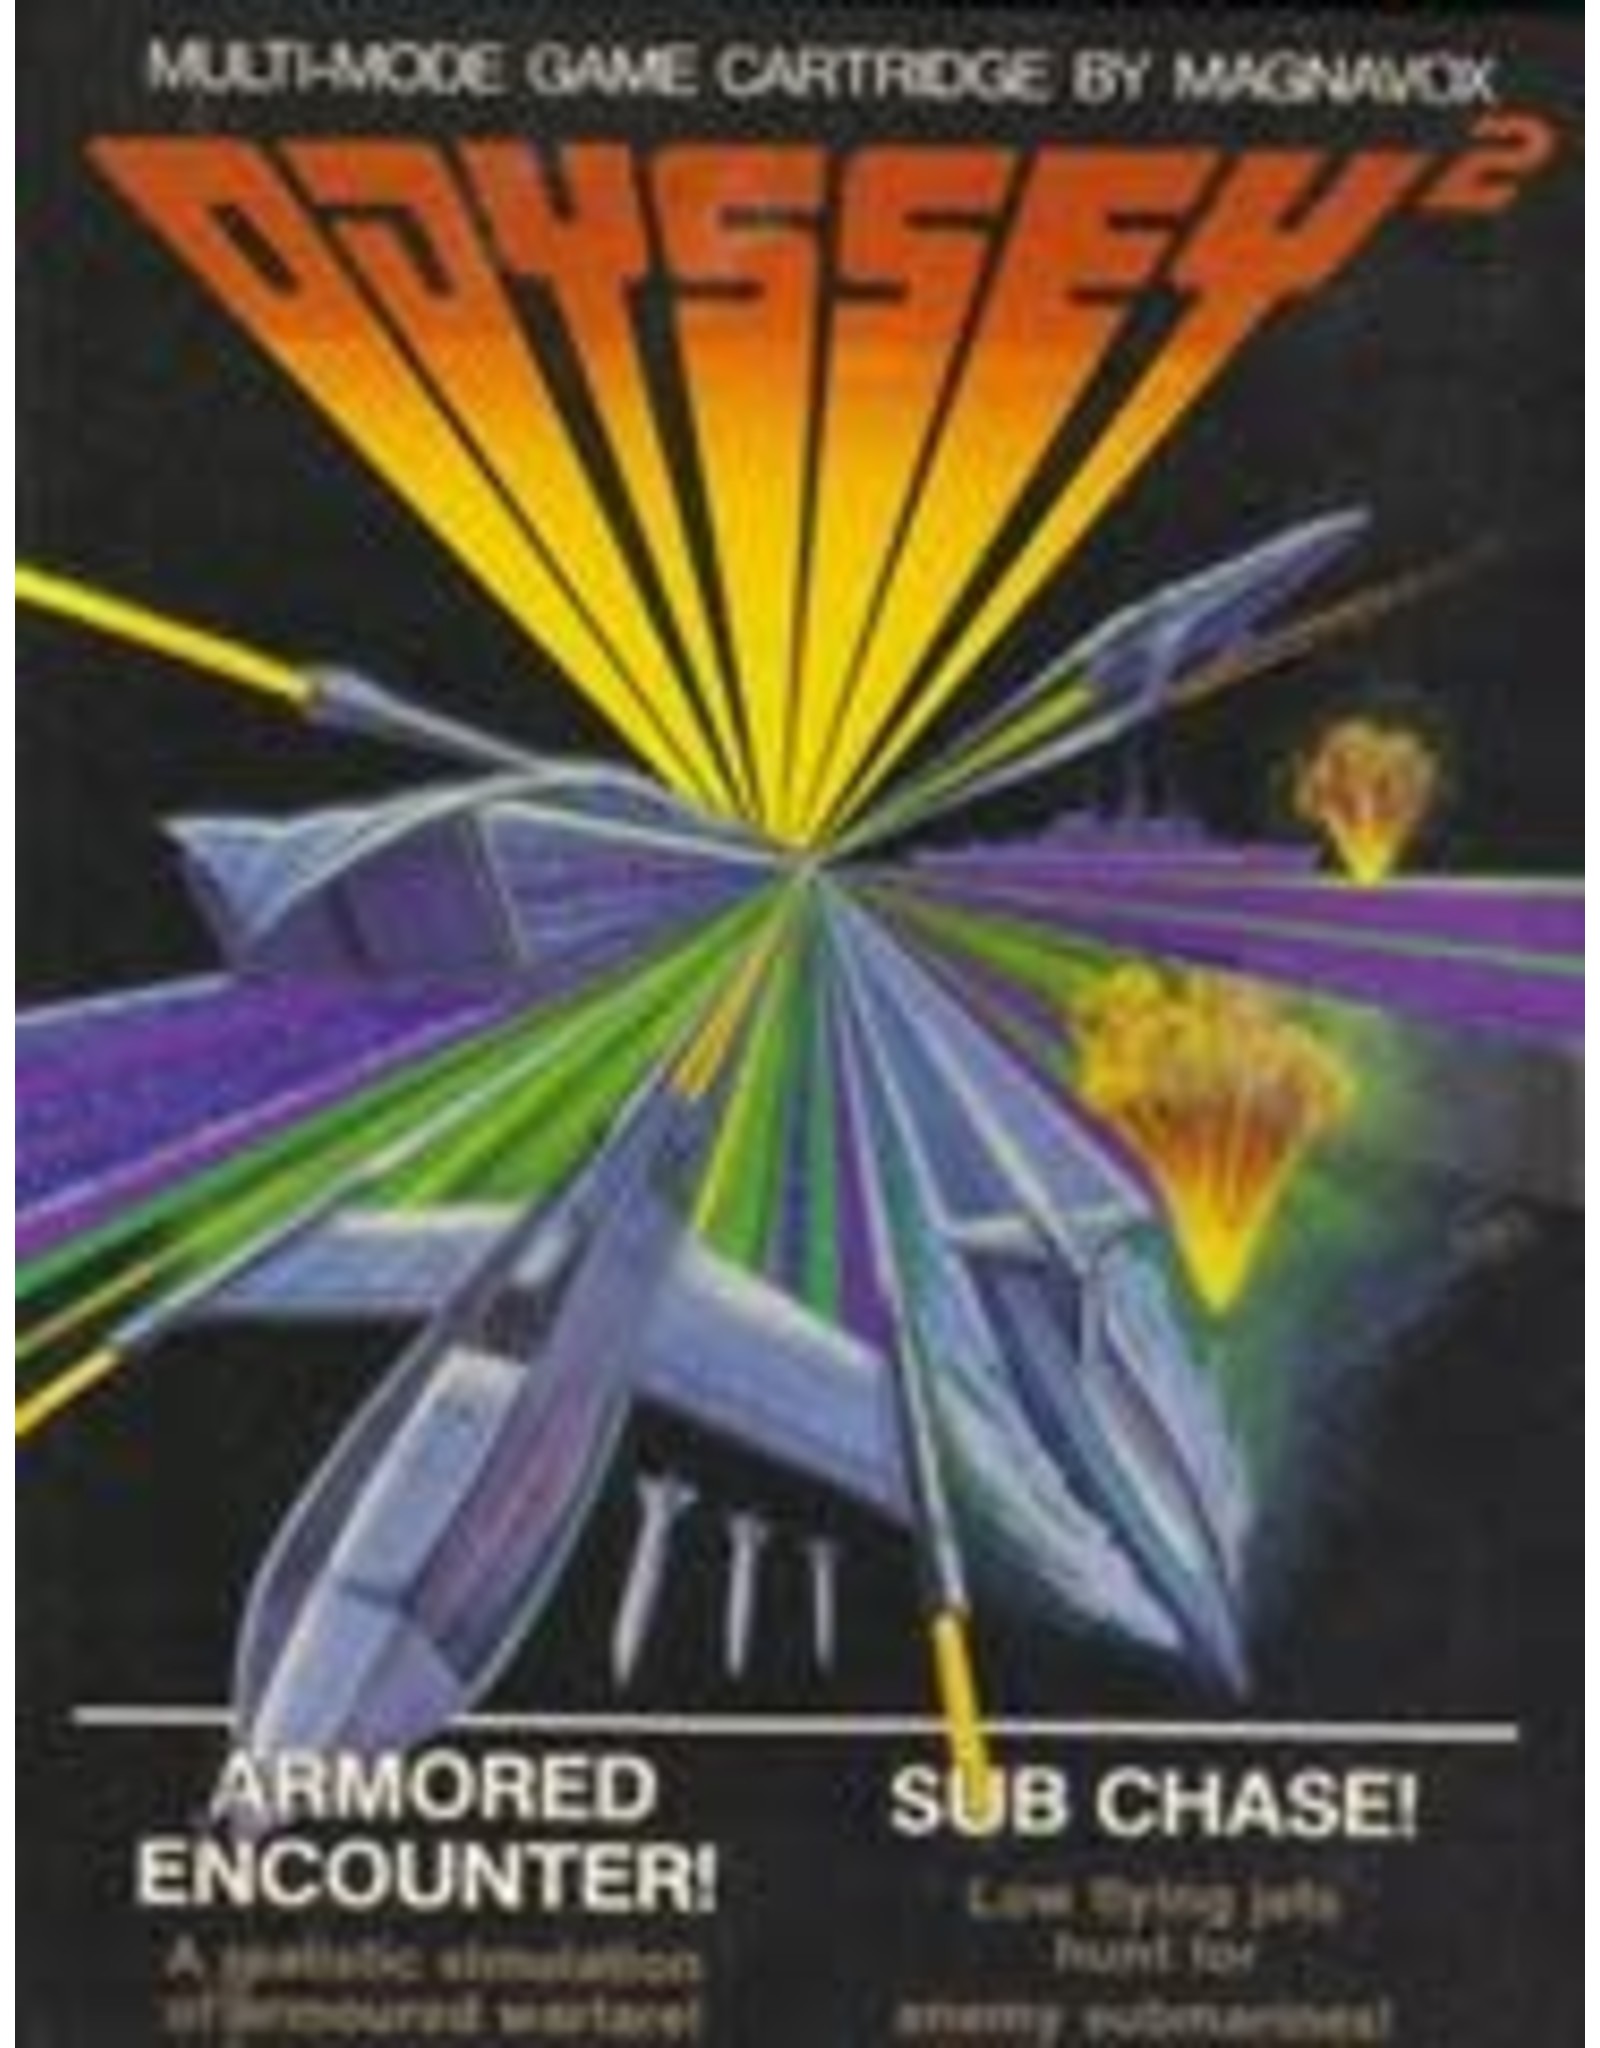 Odyssey 2 Armored Encounter! / Sub Chase! (CiB, Rough Box & Cart Label)